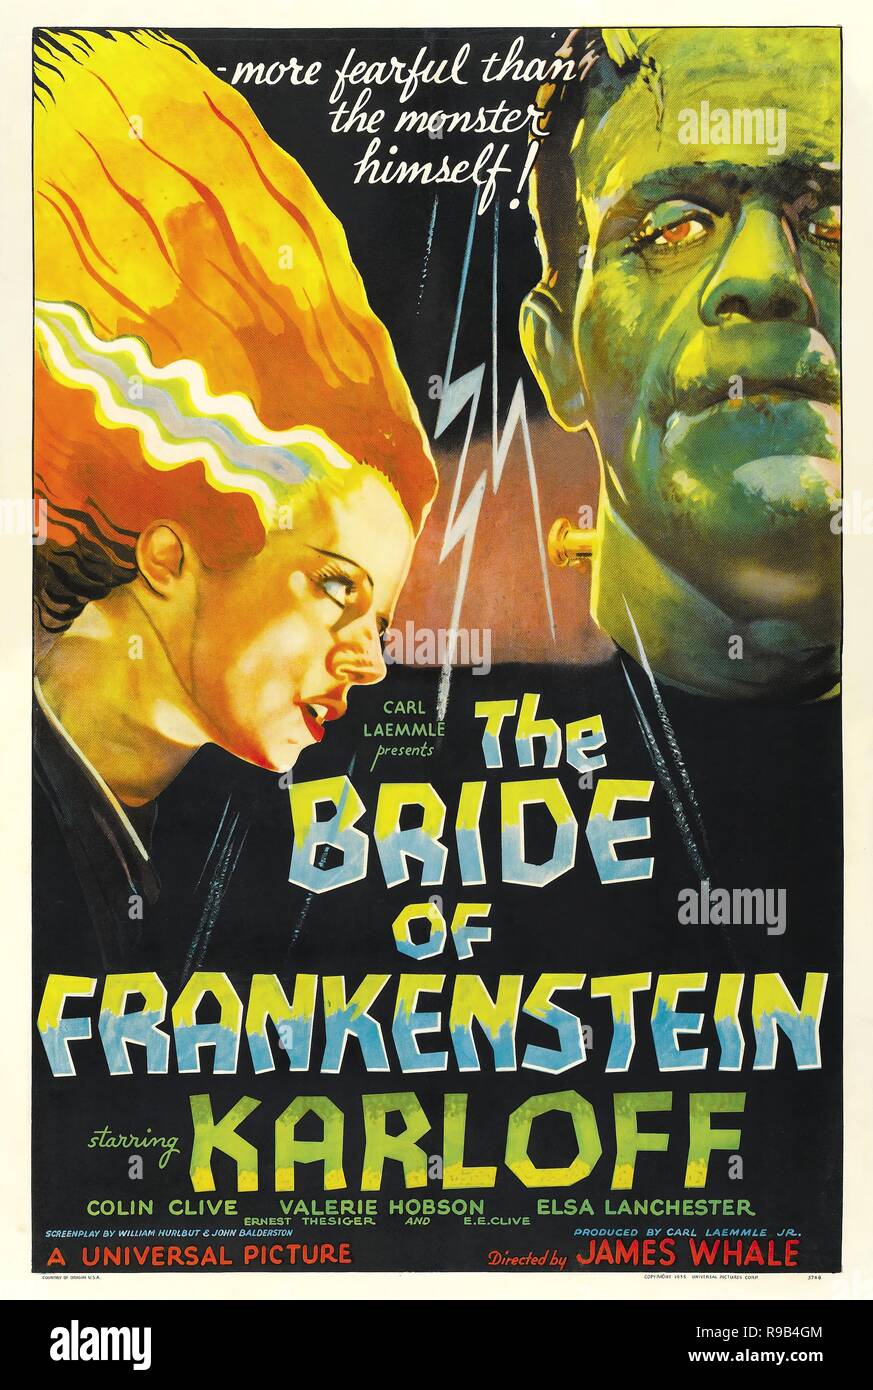 Original film title: THE BRIDE OF FRANKENSTEIN. English title: THE BRIDE OF FRANKENSTEIN. Year: 1935. Director: JAMES WHALE. Credit: UNIVERSAL PICTURES / Album Stock Photo